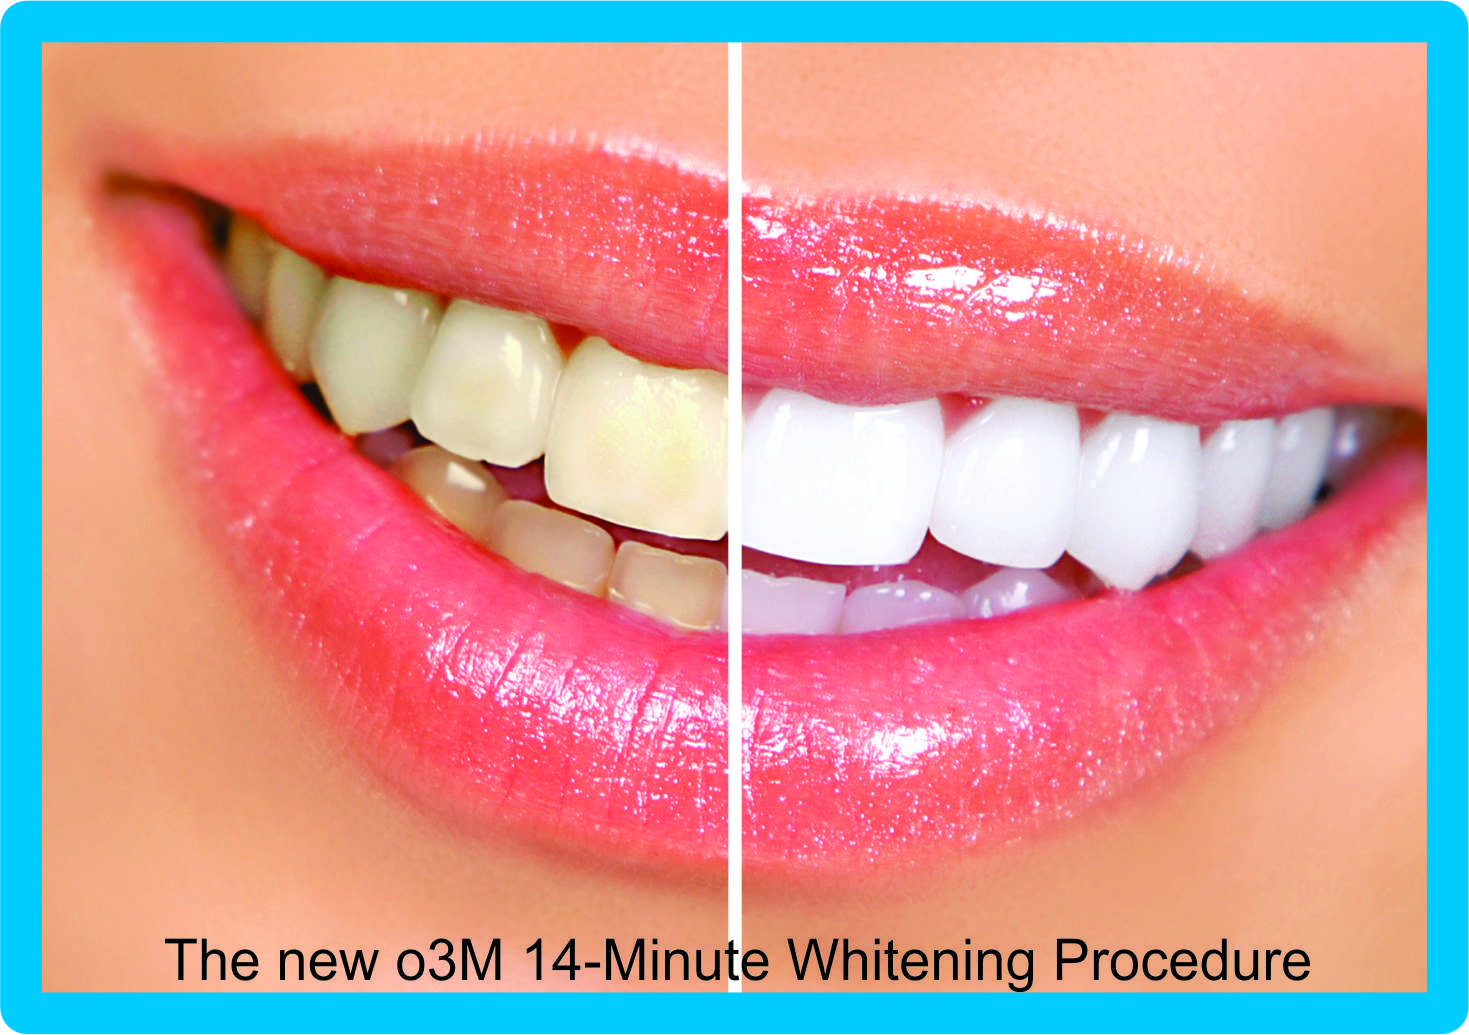 teeth whitening davinci cosmetic major newswire breakthrough apr release press